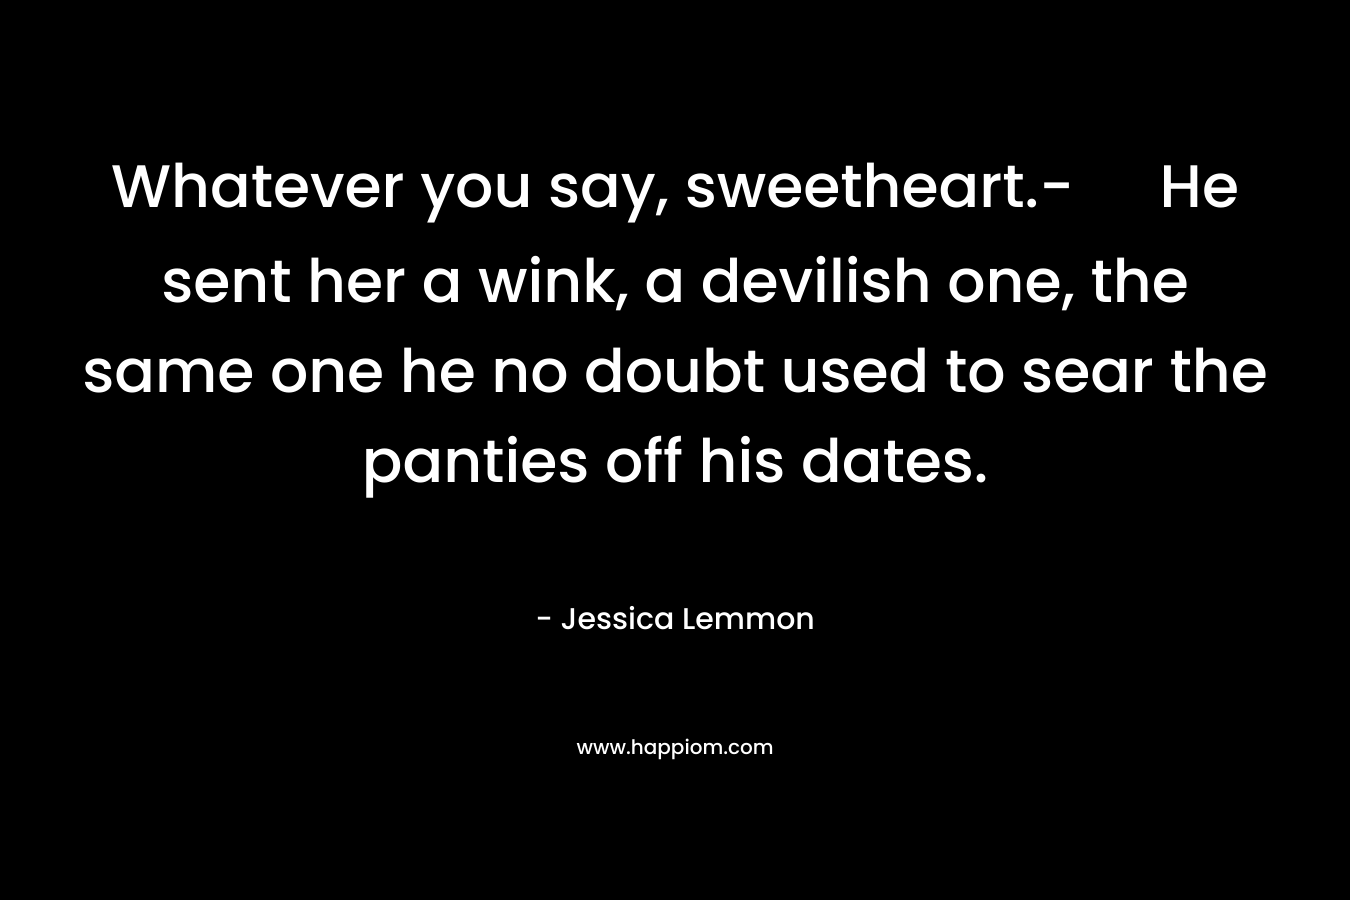 Whatever you say, sweetheart.- He sent her a wink, a devilish one, the same one he no doubt used to sear the panties off his dates. – Jessica Lemmon